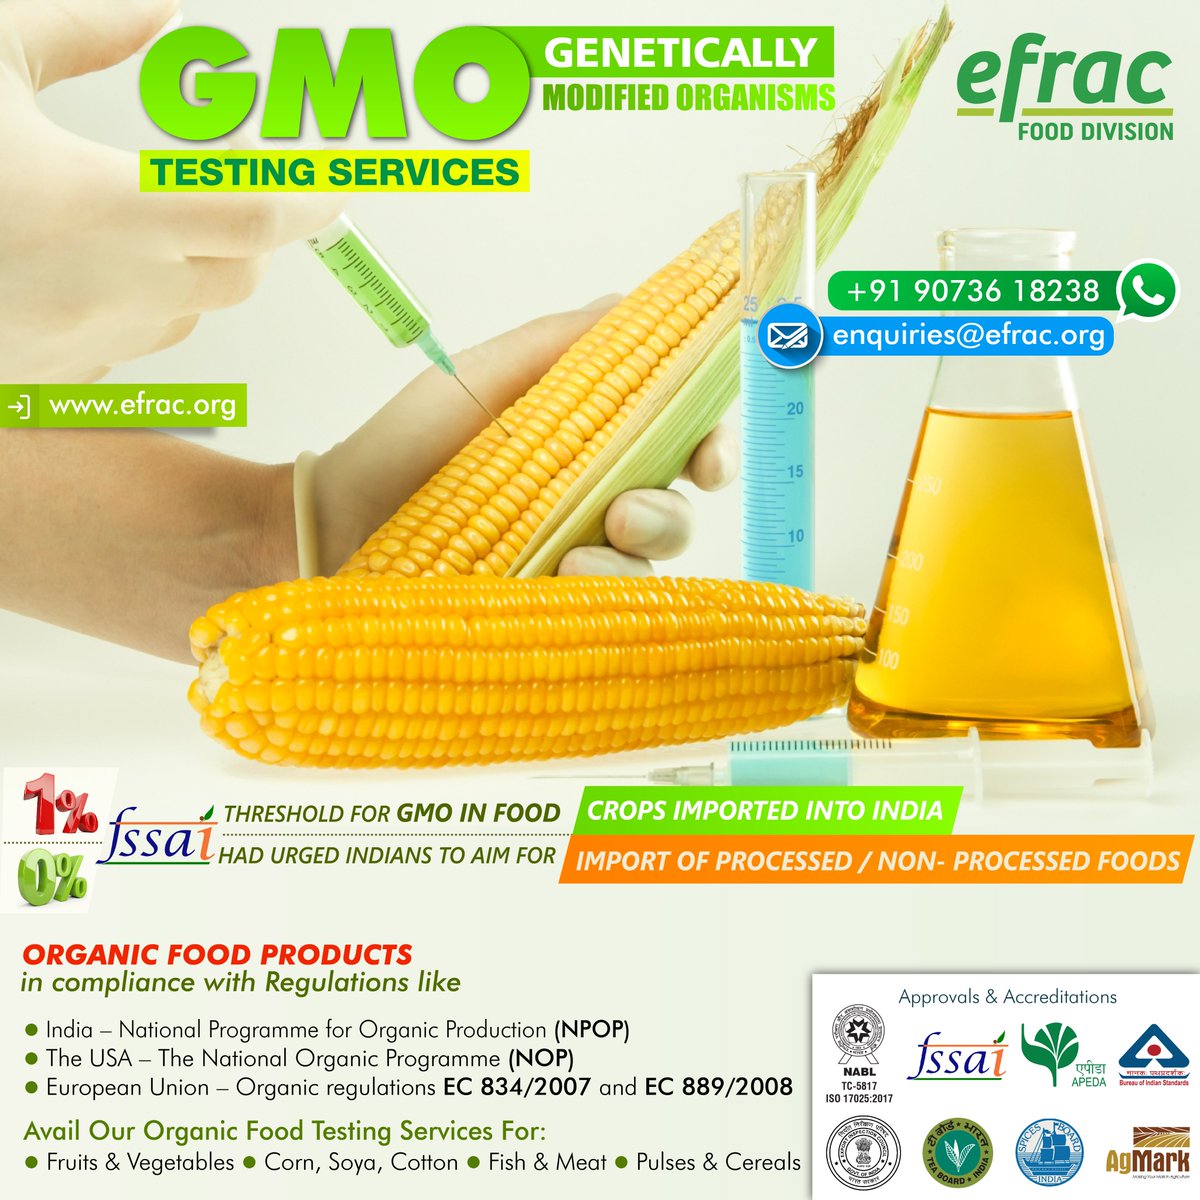 #Efrac #efraclab #GMOtesting #nongmocertification #geneticanalysis #cropintegrity #transparencyinfarming #foodsafetyfirst #certifywithconfidence #RegulatoryCompliance #trustinscience #DataDrivenInsights